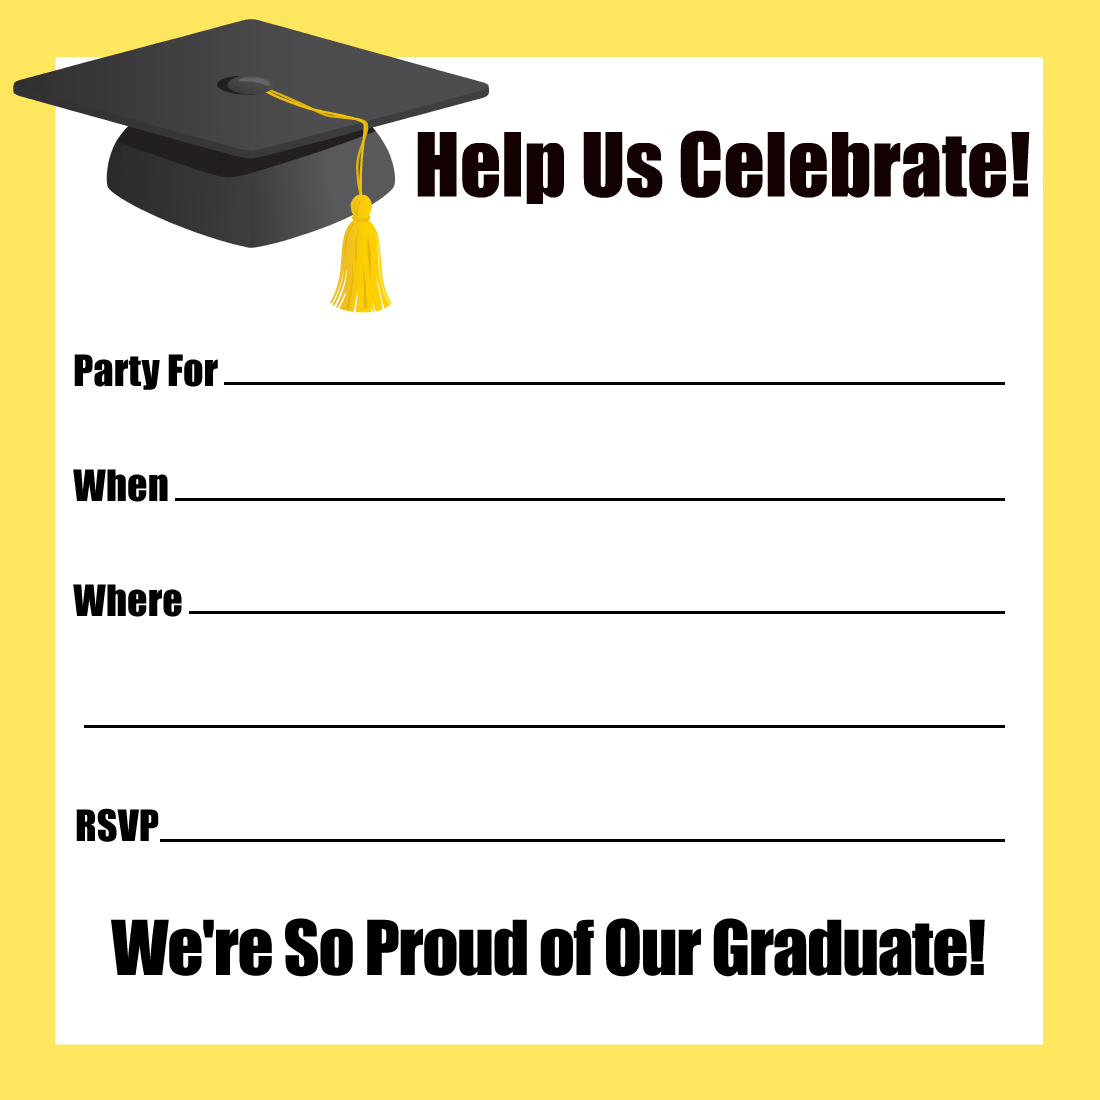 Free Printable Graduation Party Invitations